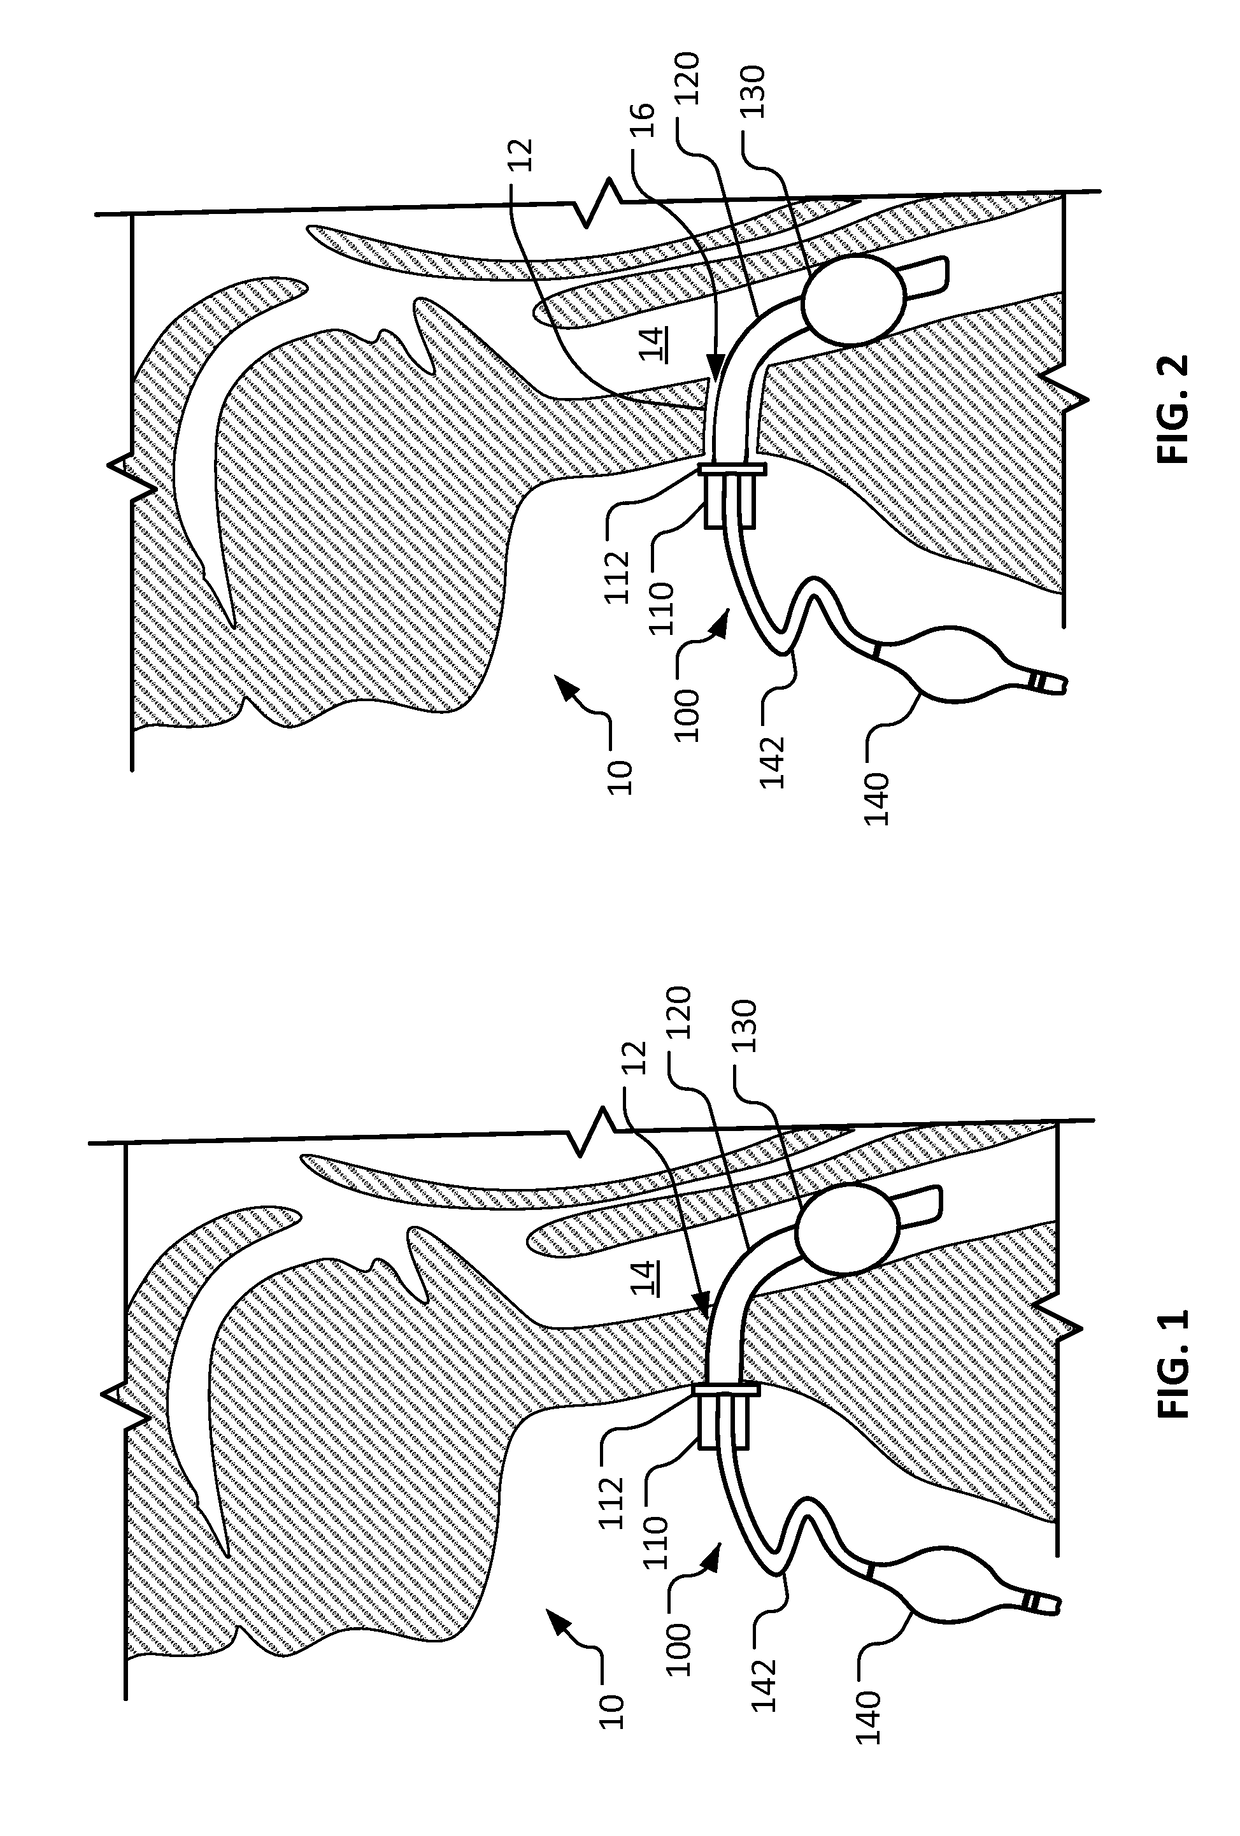 Double cuff tracheostomy device